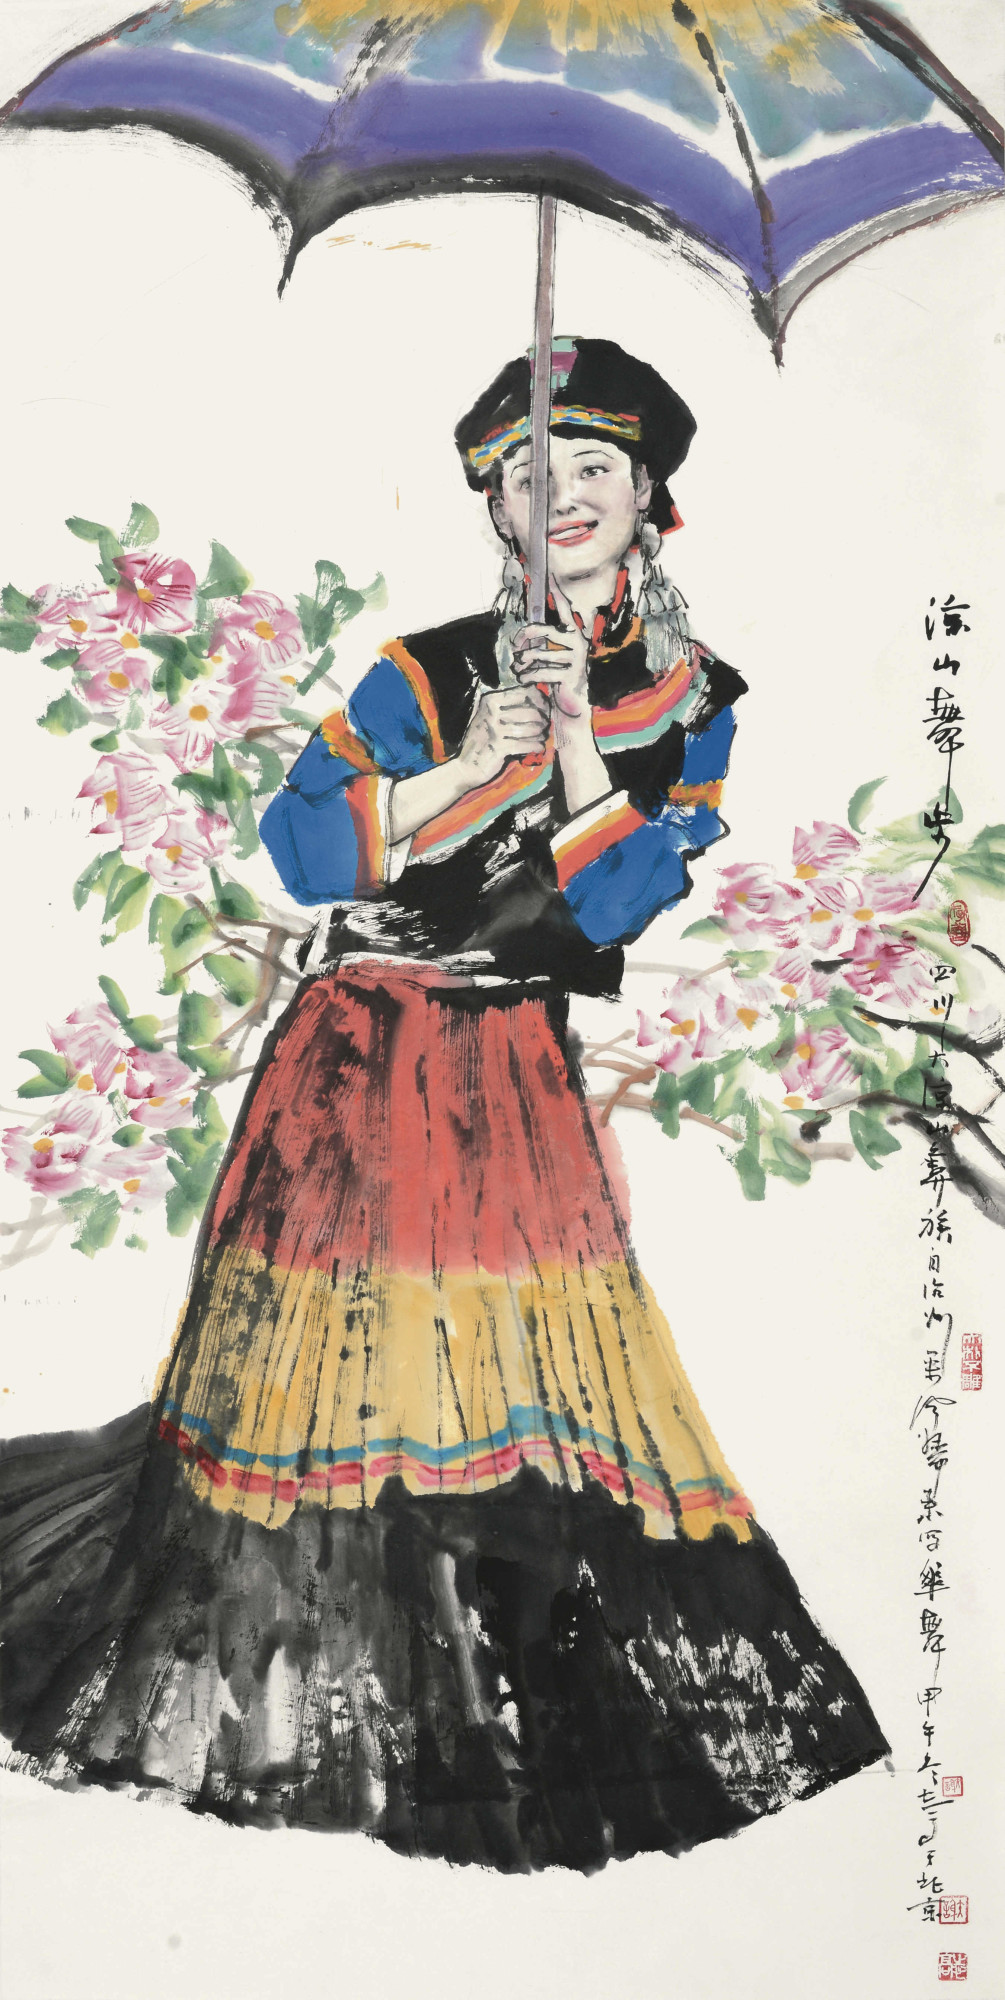  Xie Zhigao, La danza della Montagna Liang